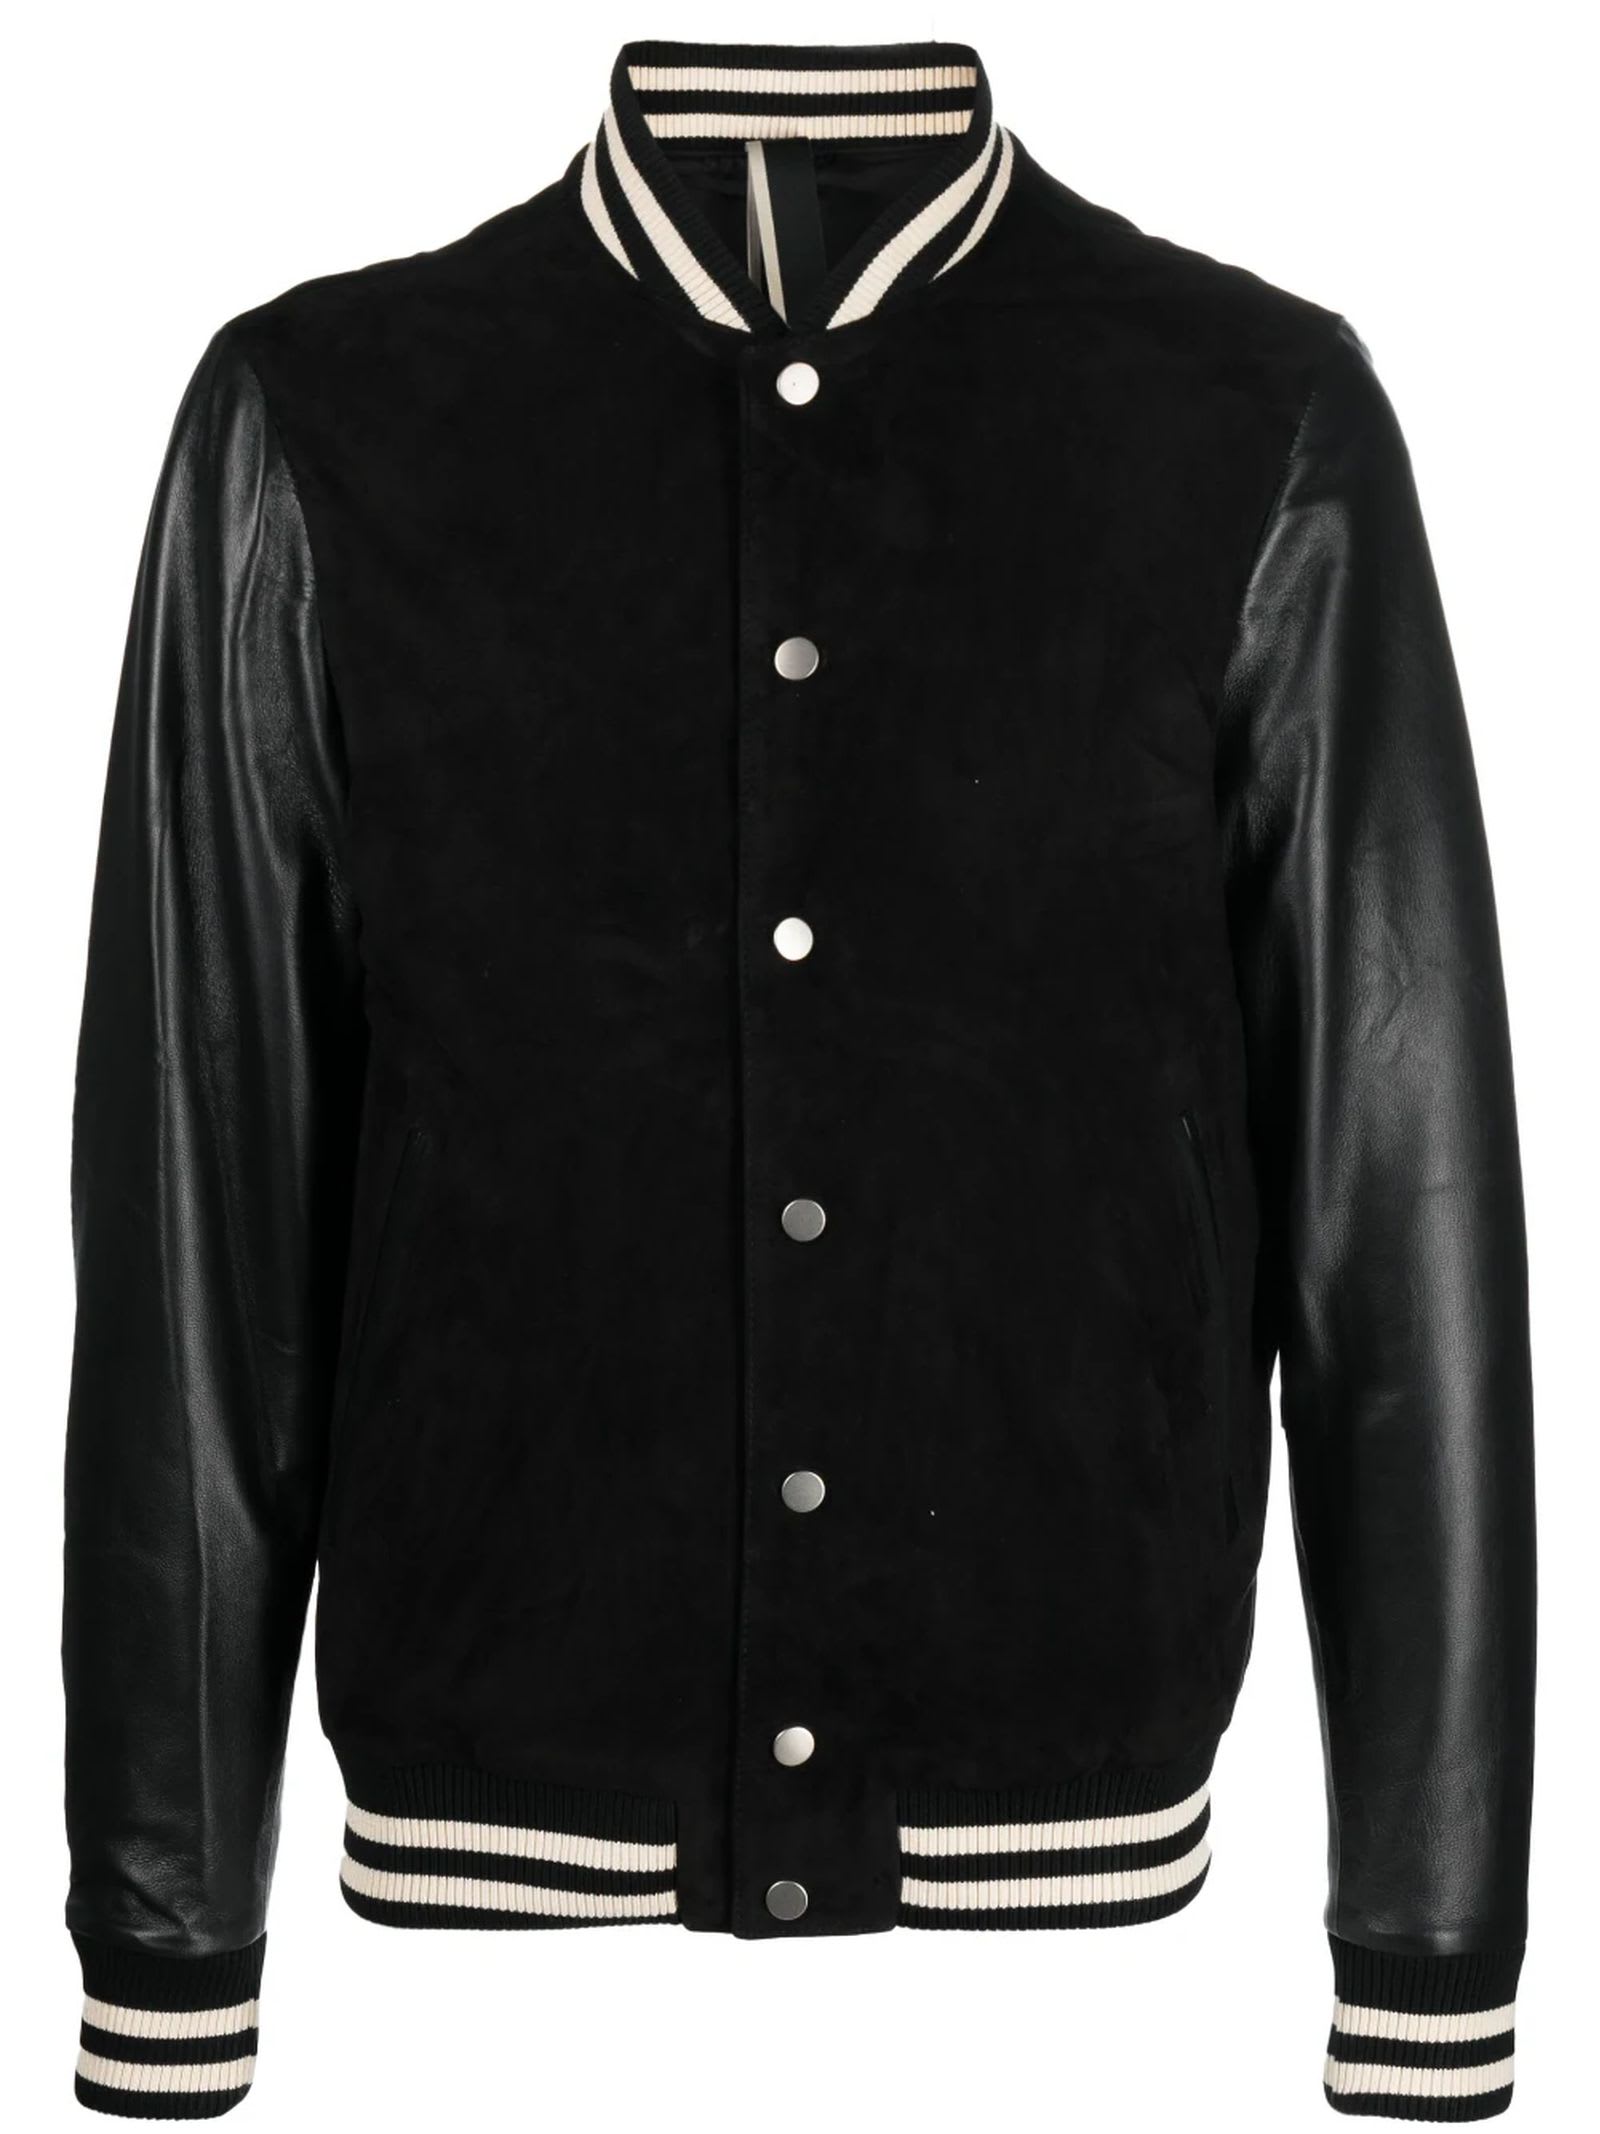 Low Brand Black Leather Bomber Jacket